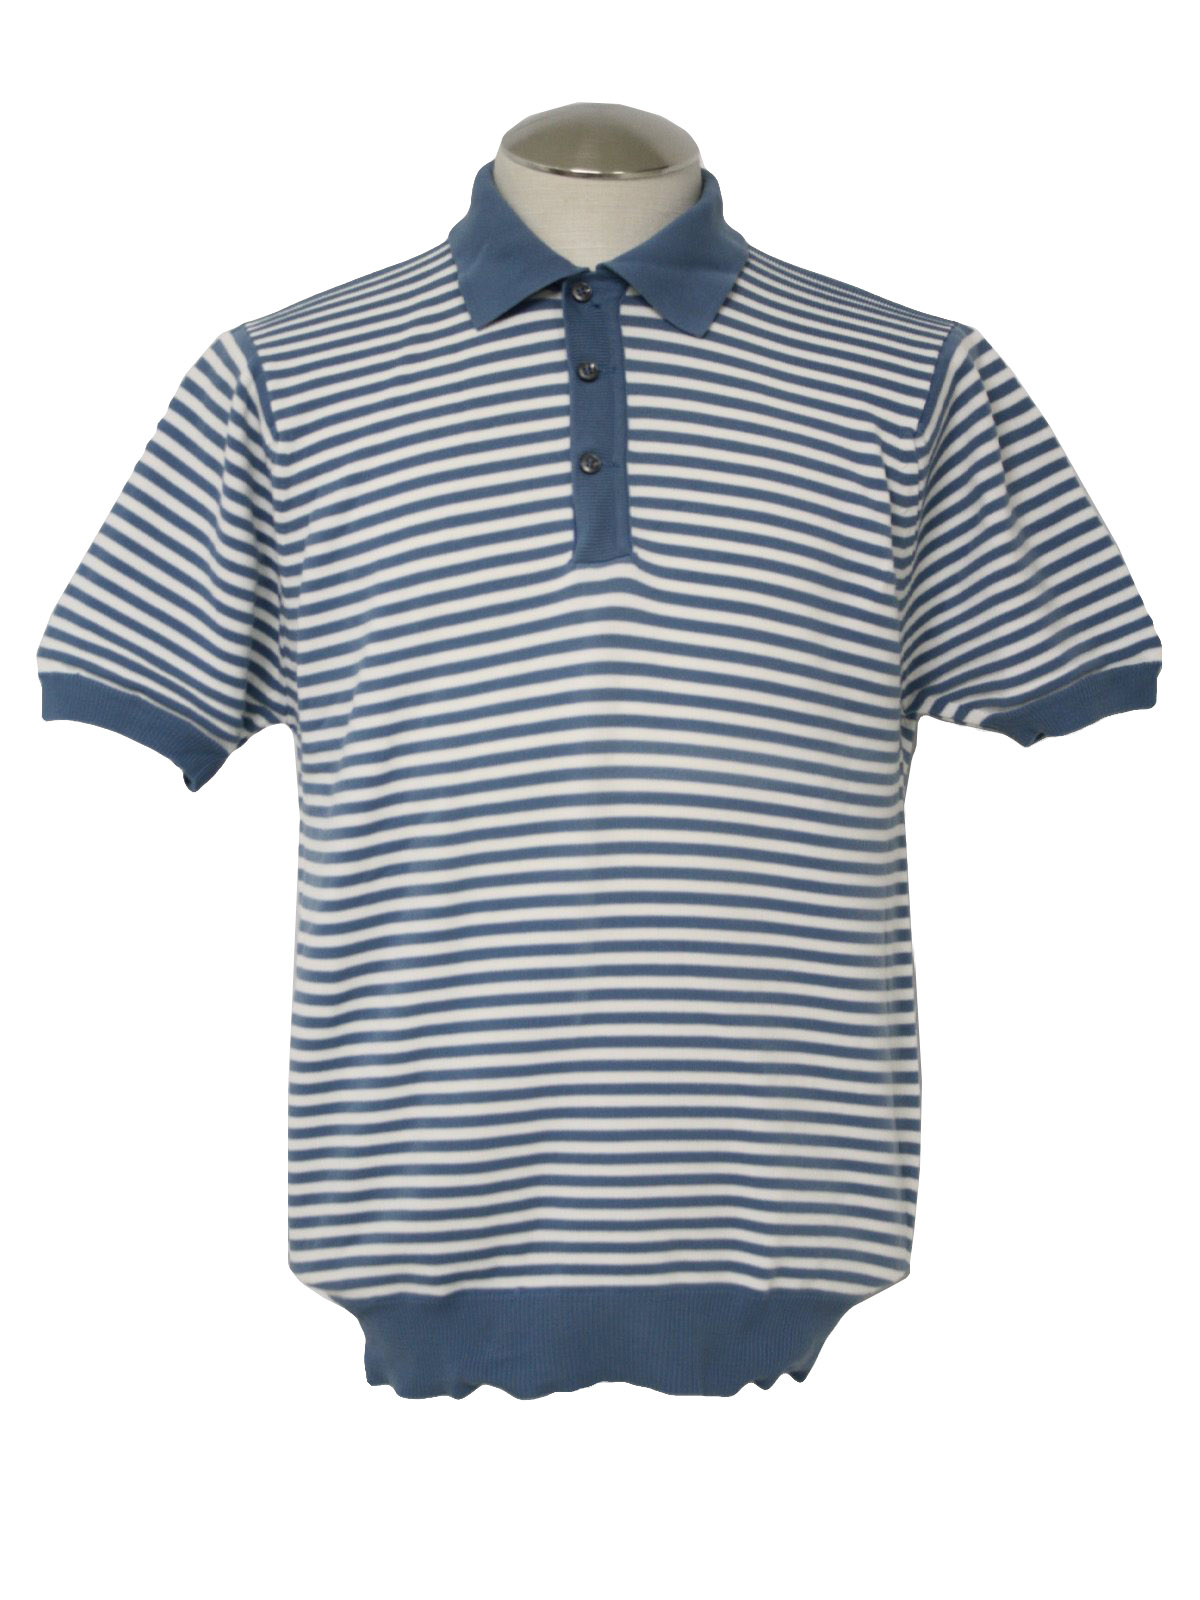 Vintage 1960's Knit Shirt: 60s -Puritan- Mens blue and white ban lon ...